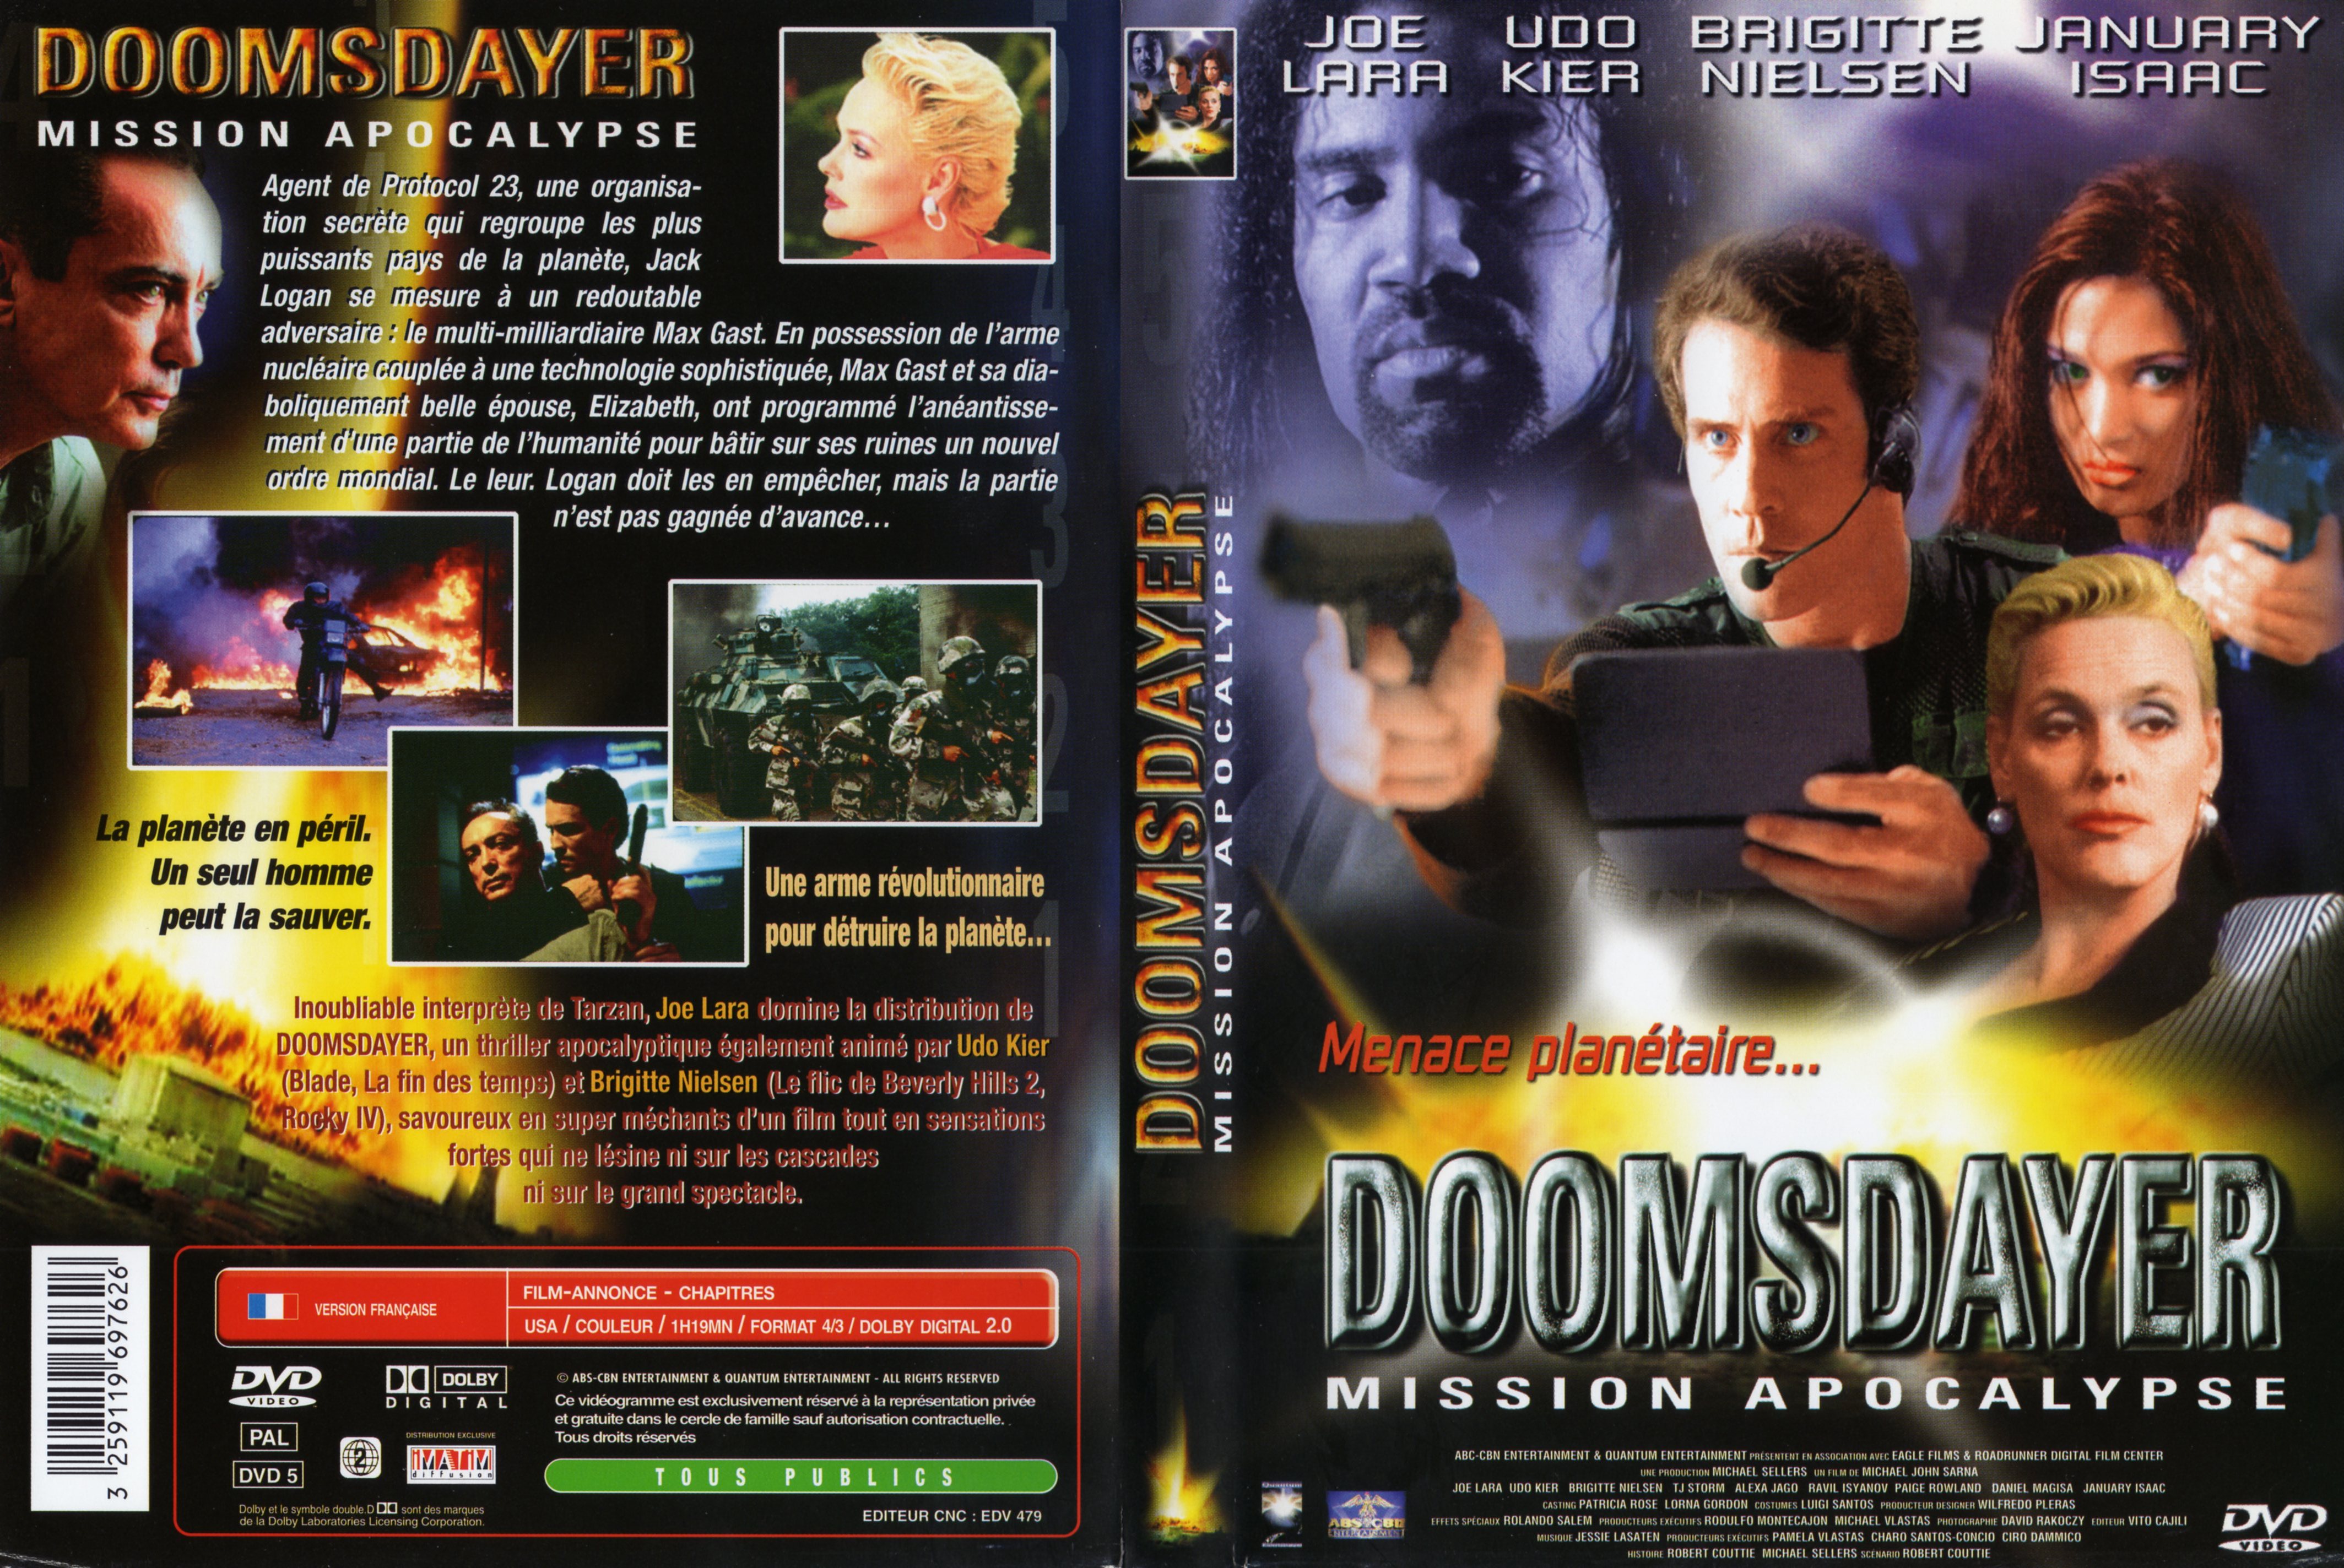 Jaquette DVD Doomsdayer